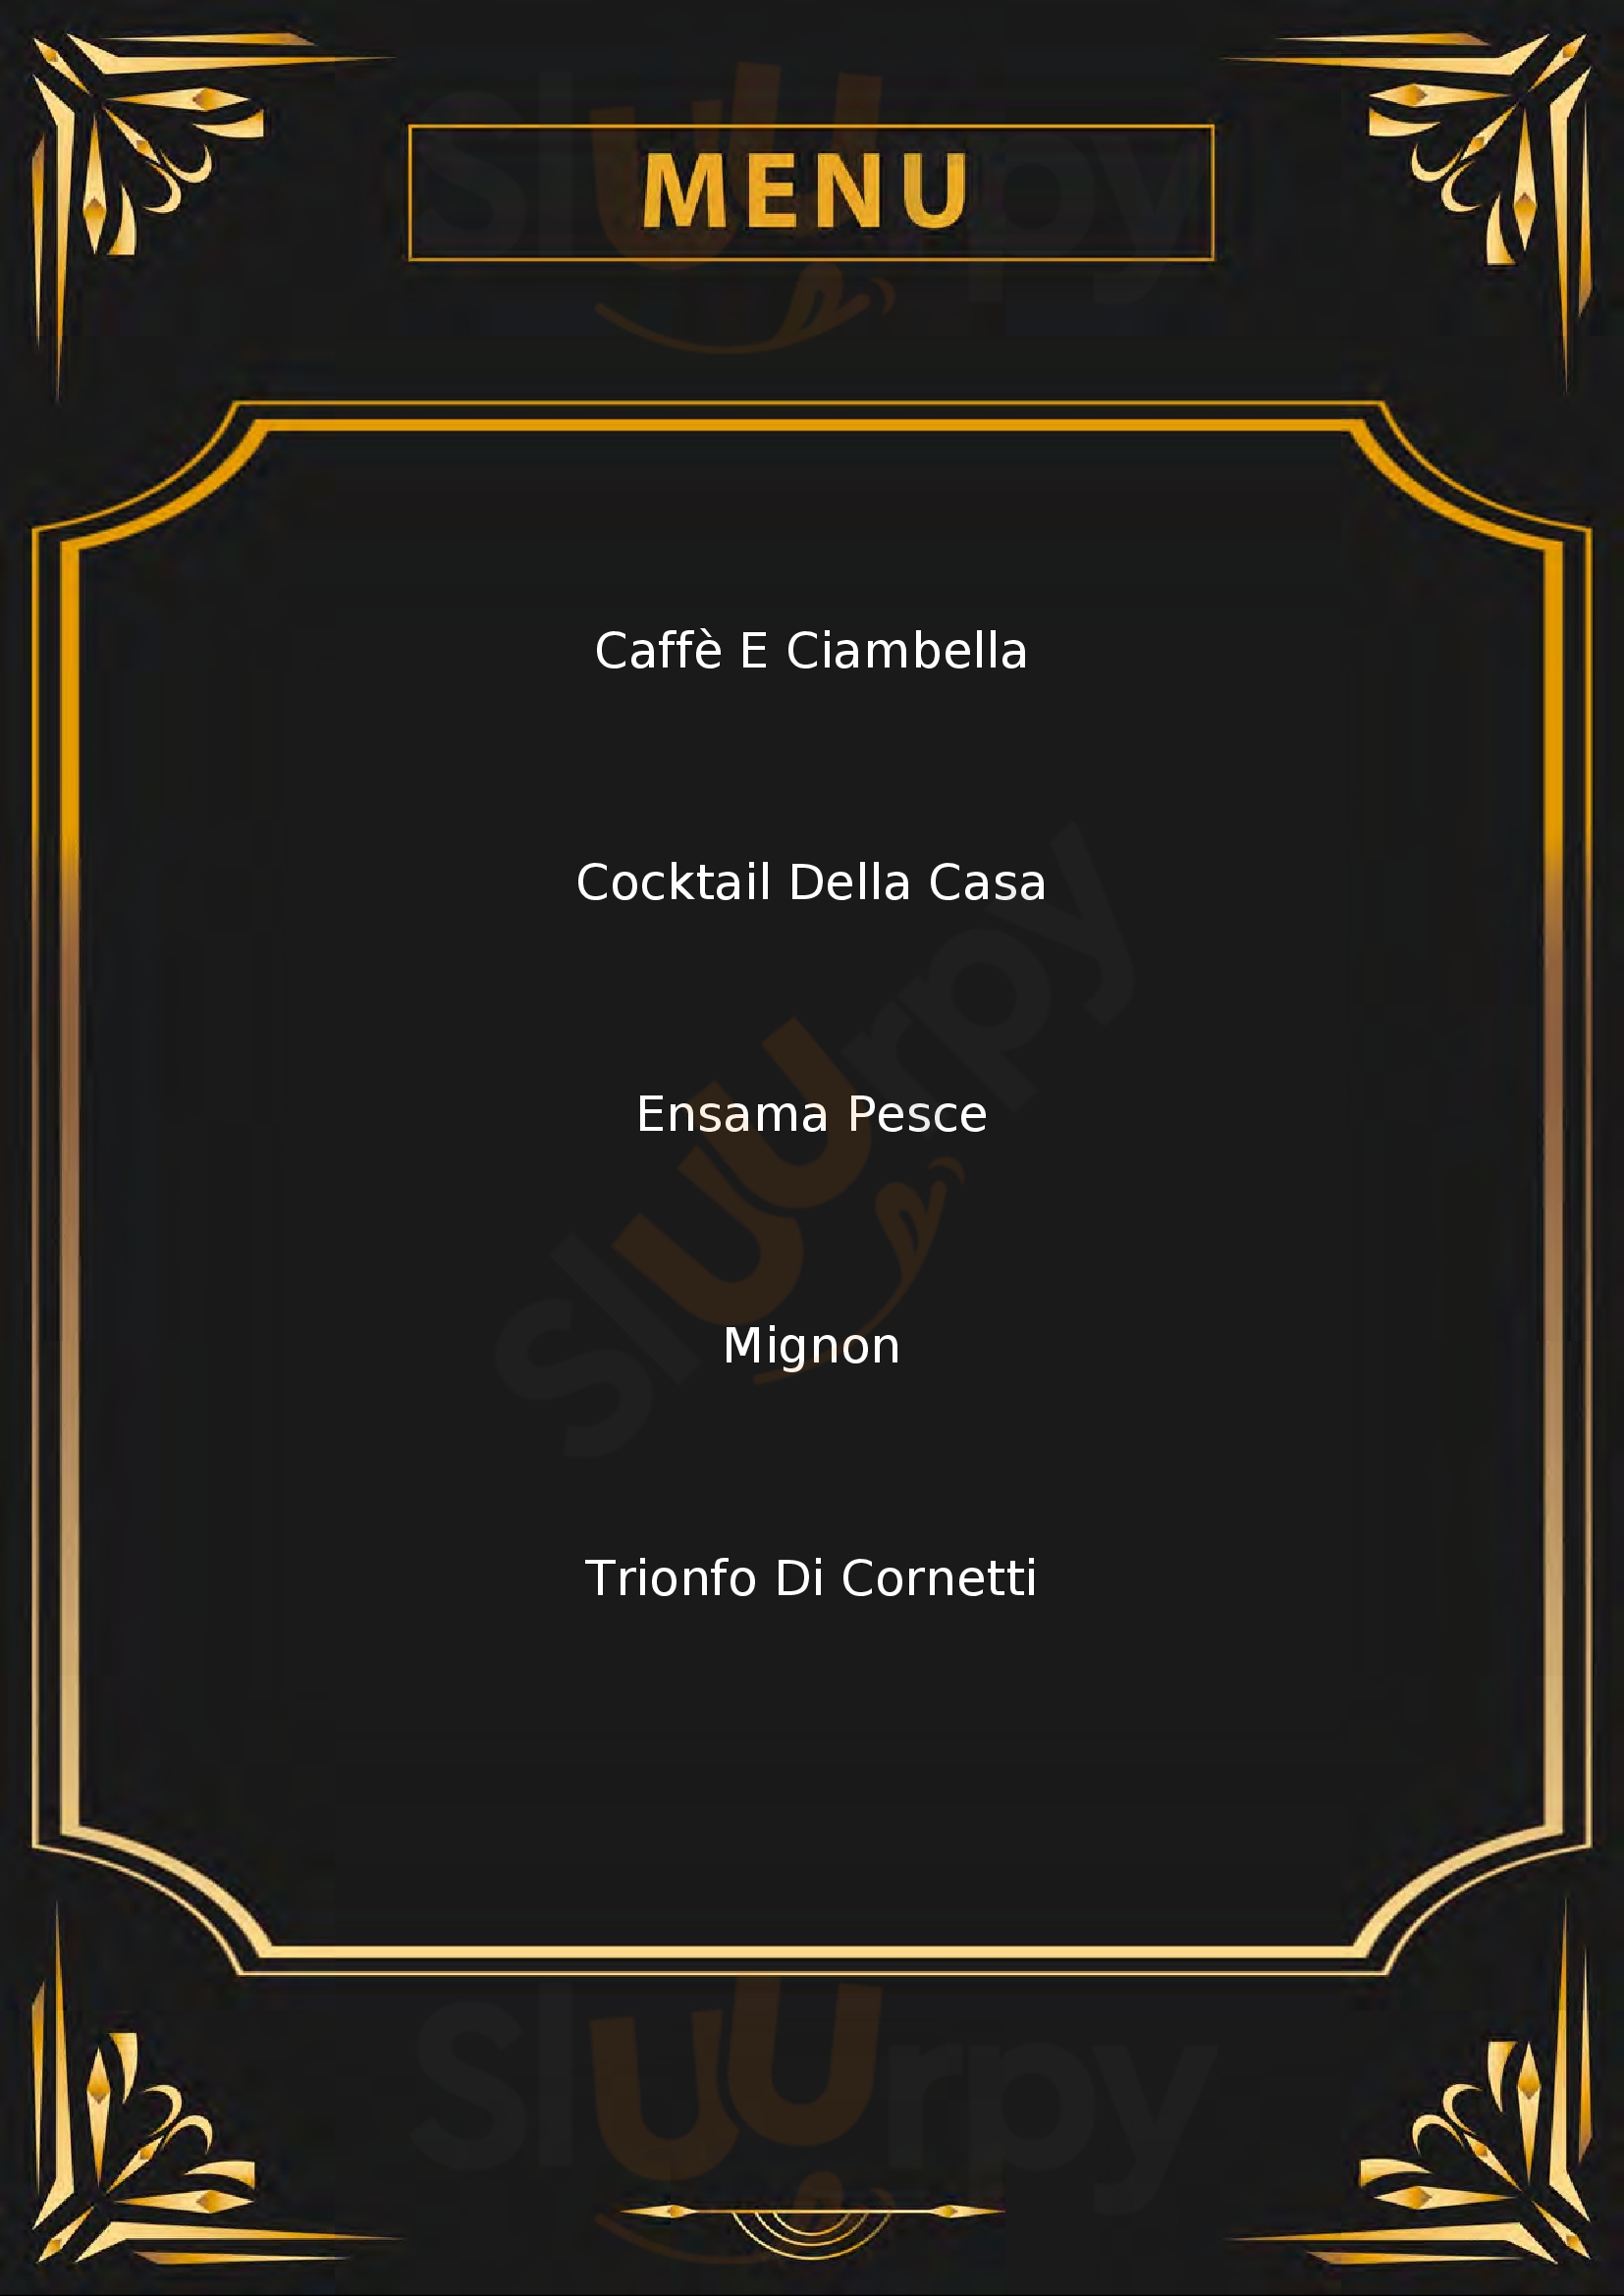 T & T Caffè Roma menù 1 pagina